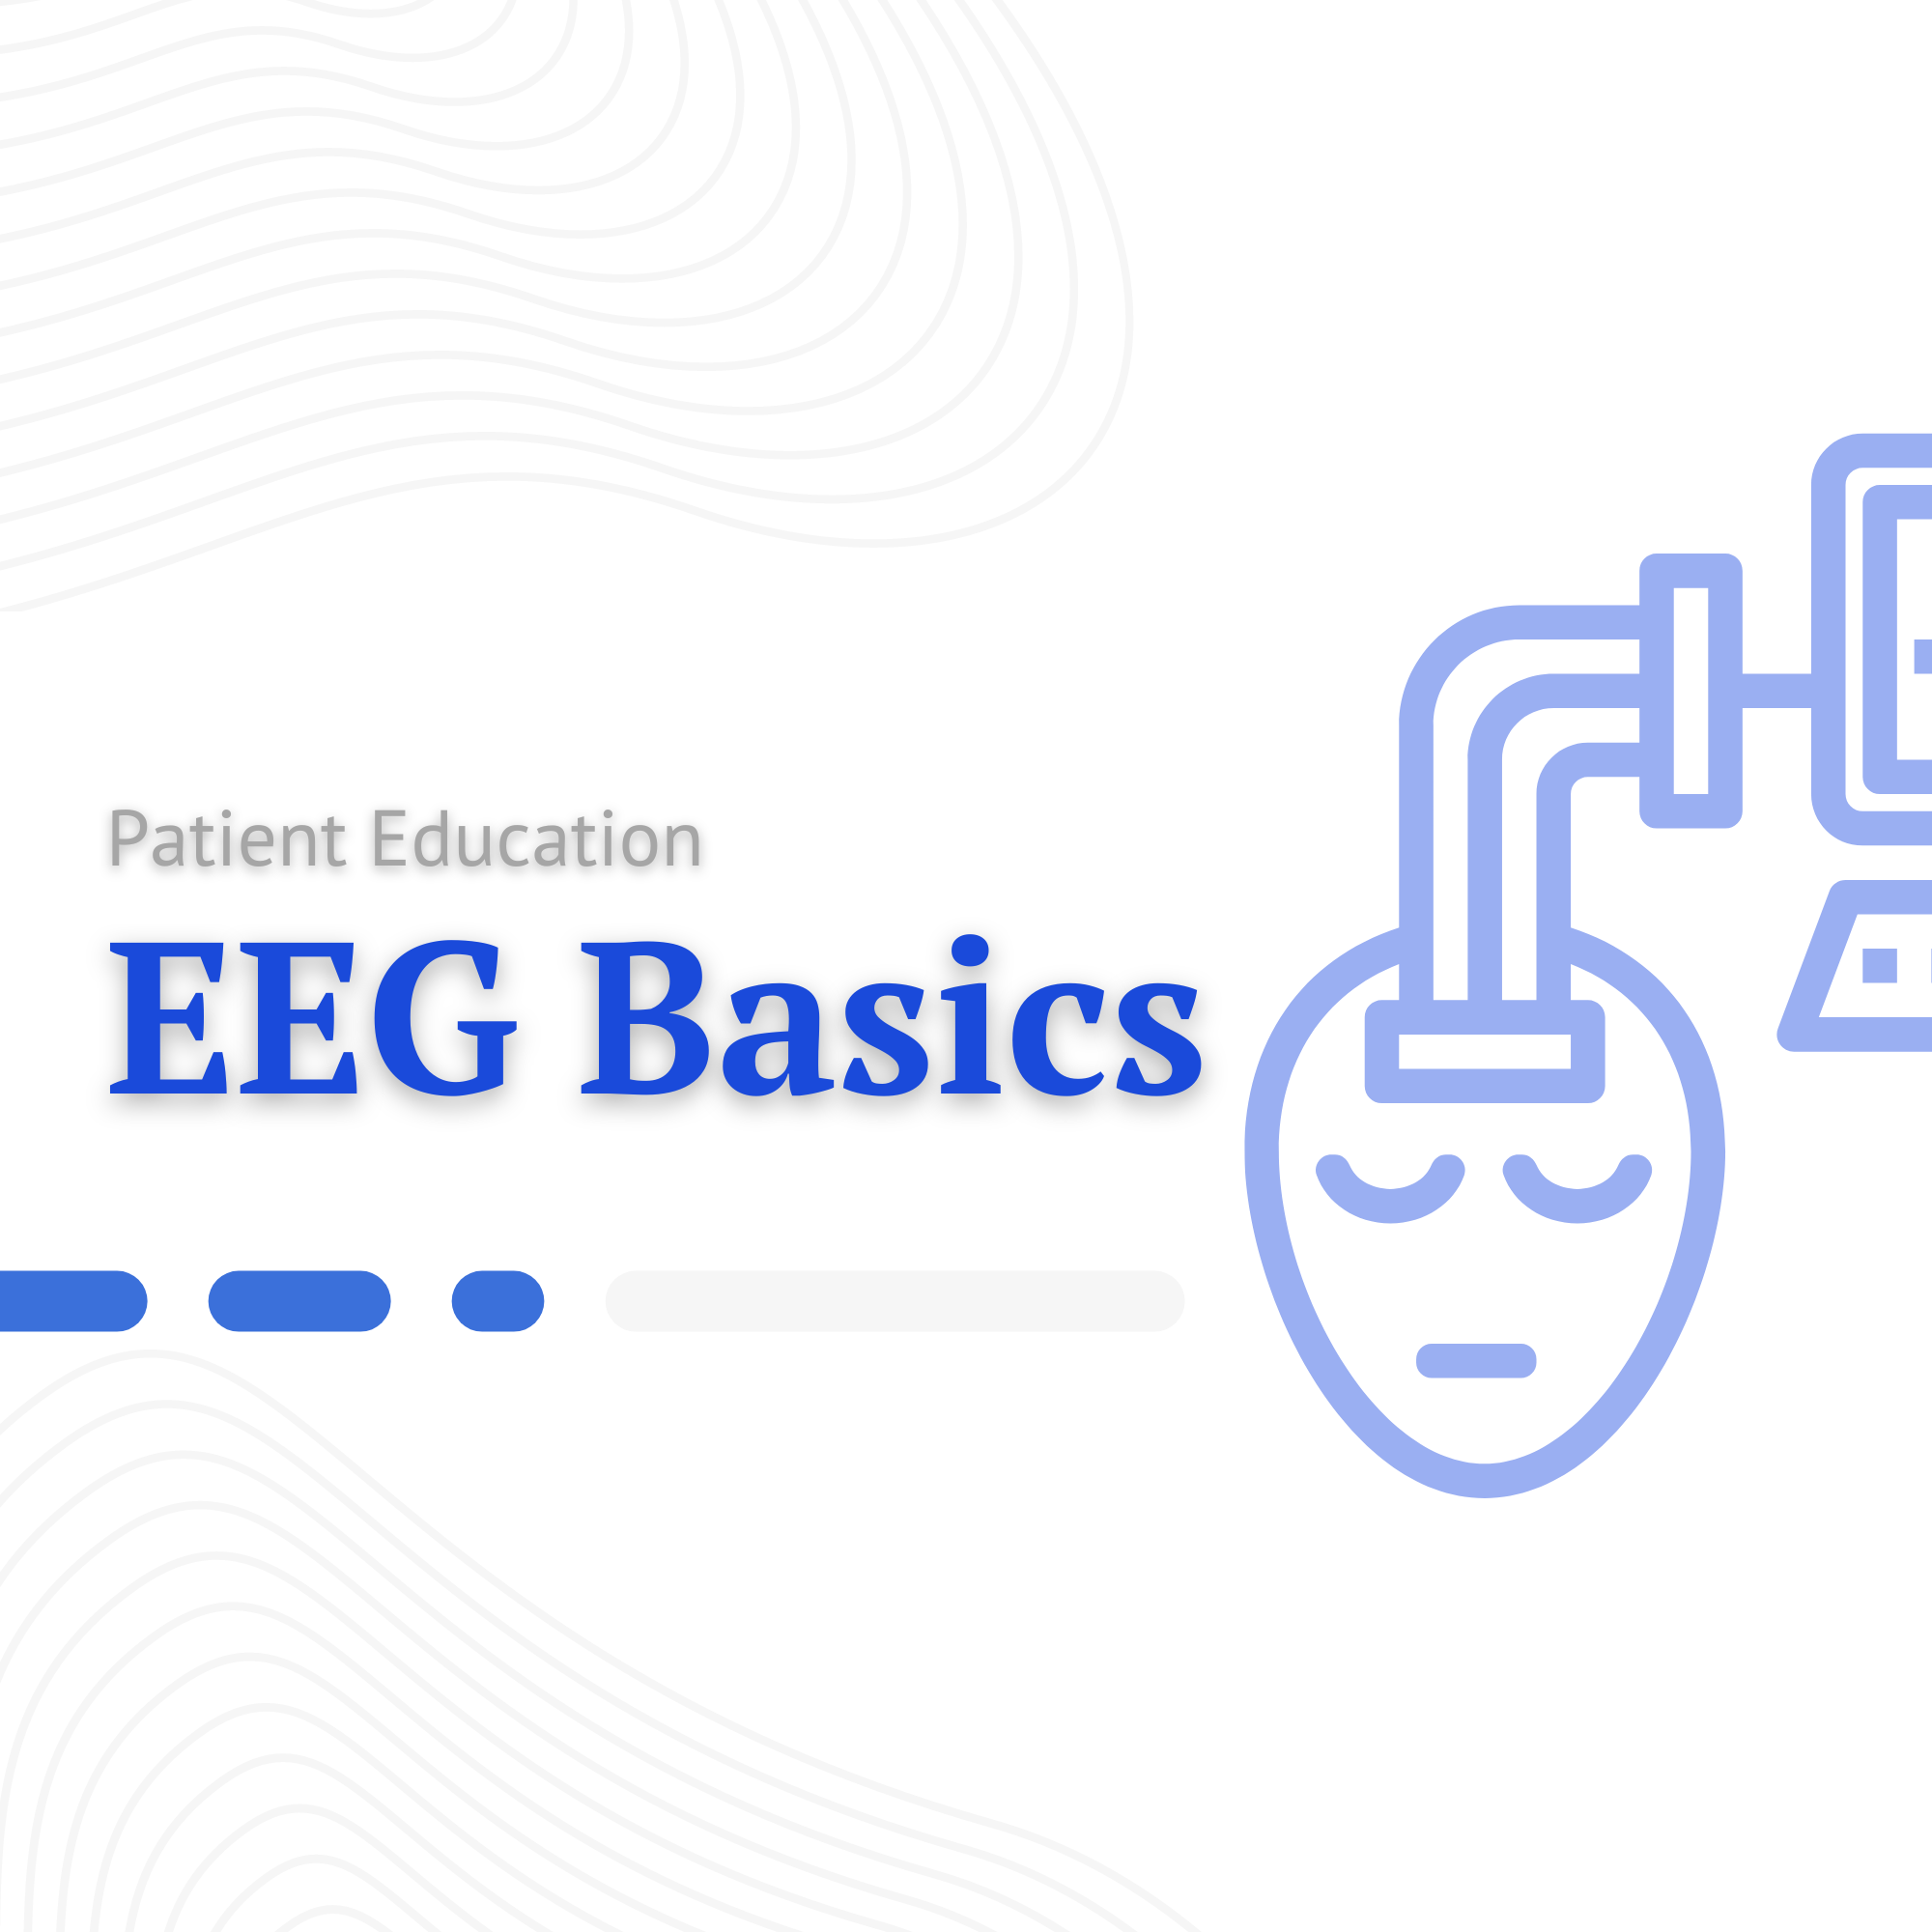 EEG Basics Cover Photo.png